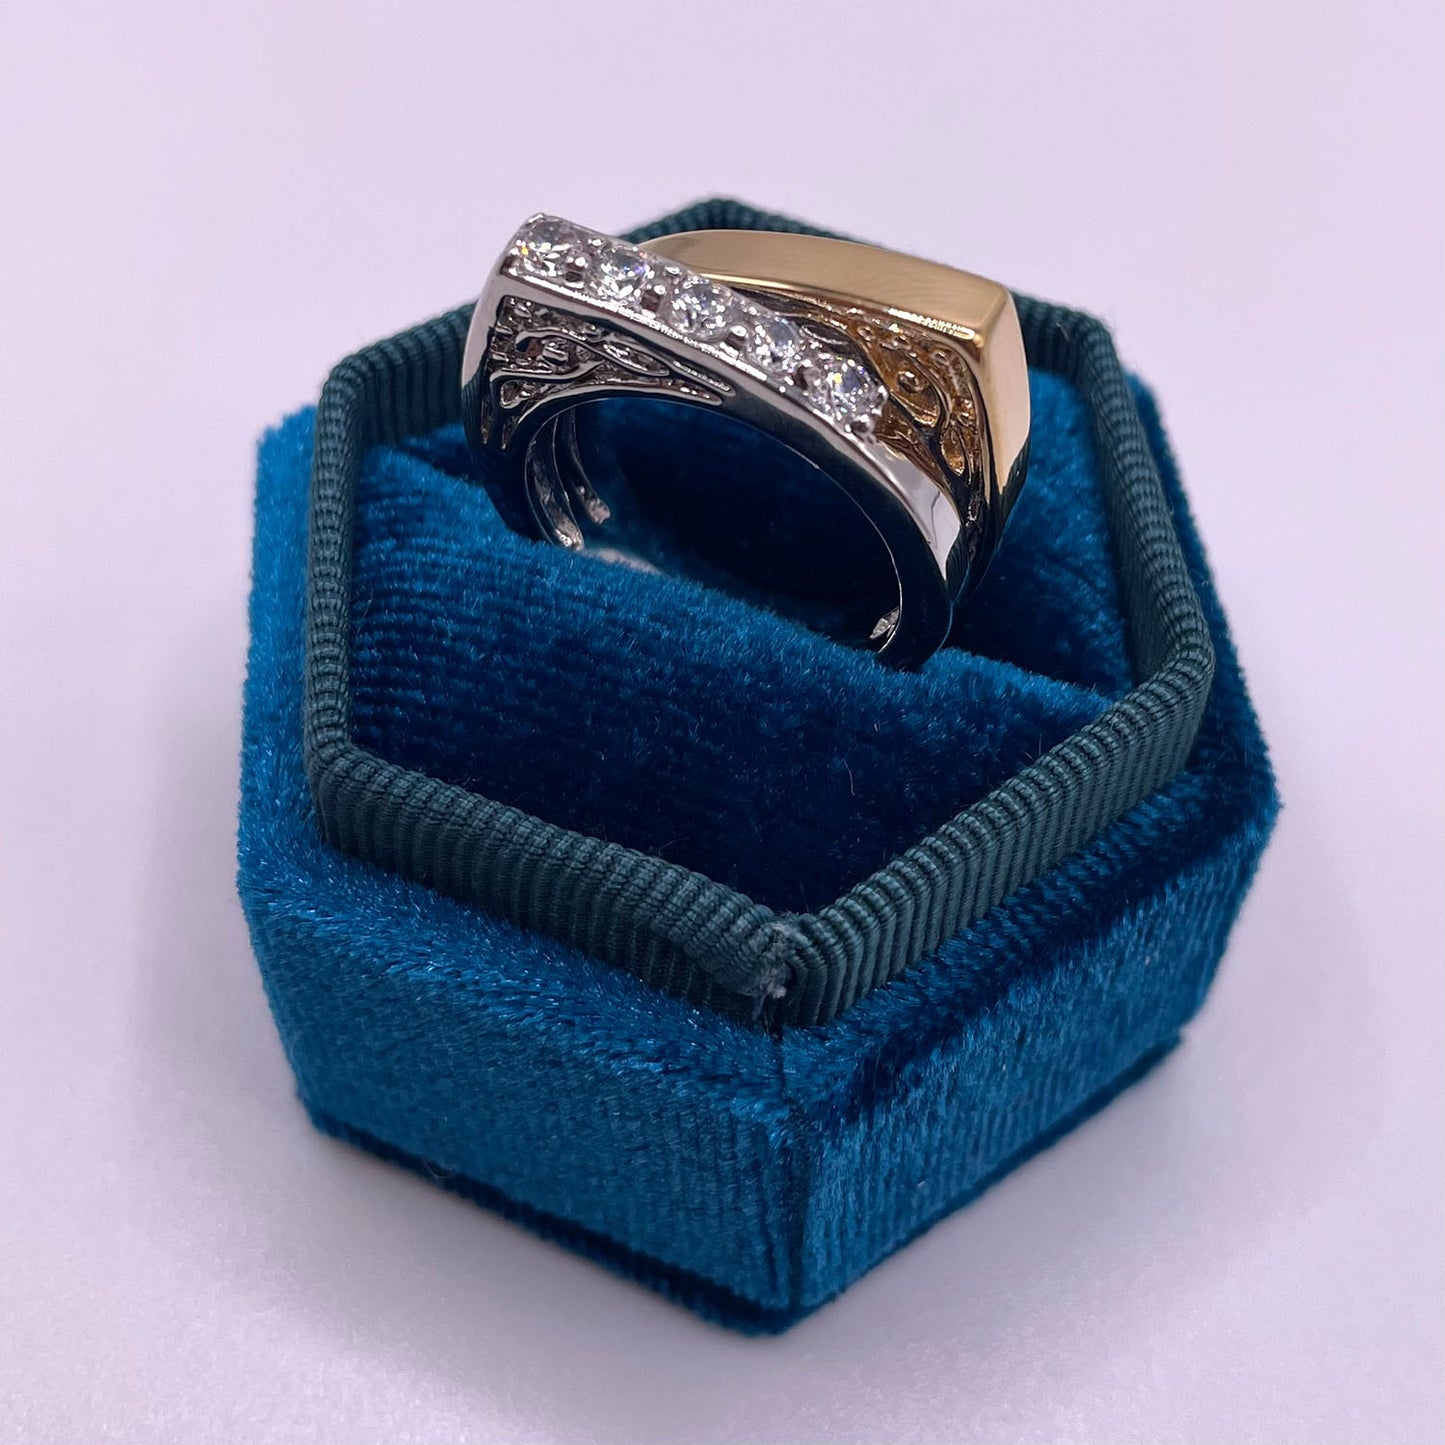 Ariel CZ Diamond Double Bar Ring, 2-Tone Silver Gold - Zahra Jewelry